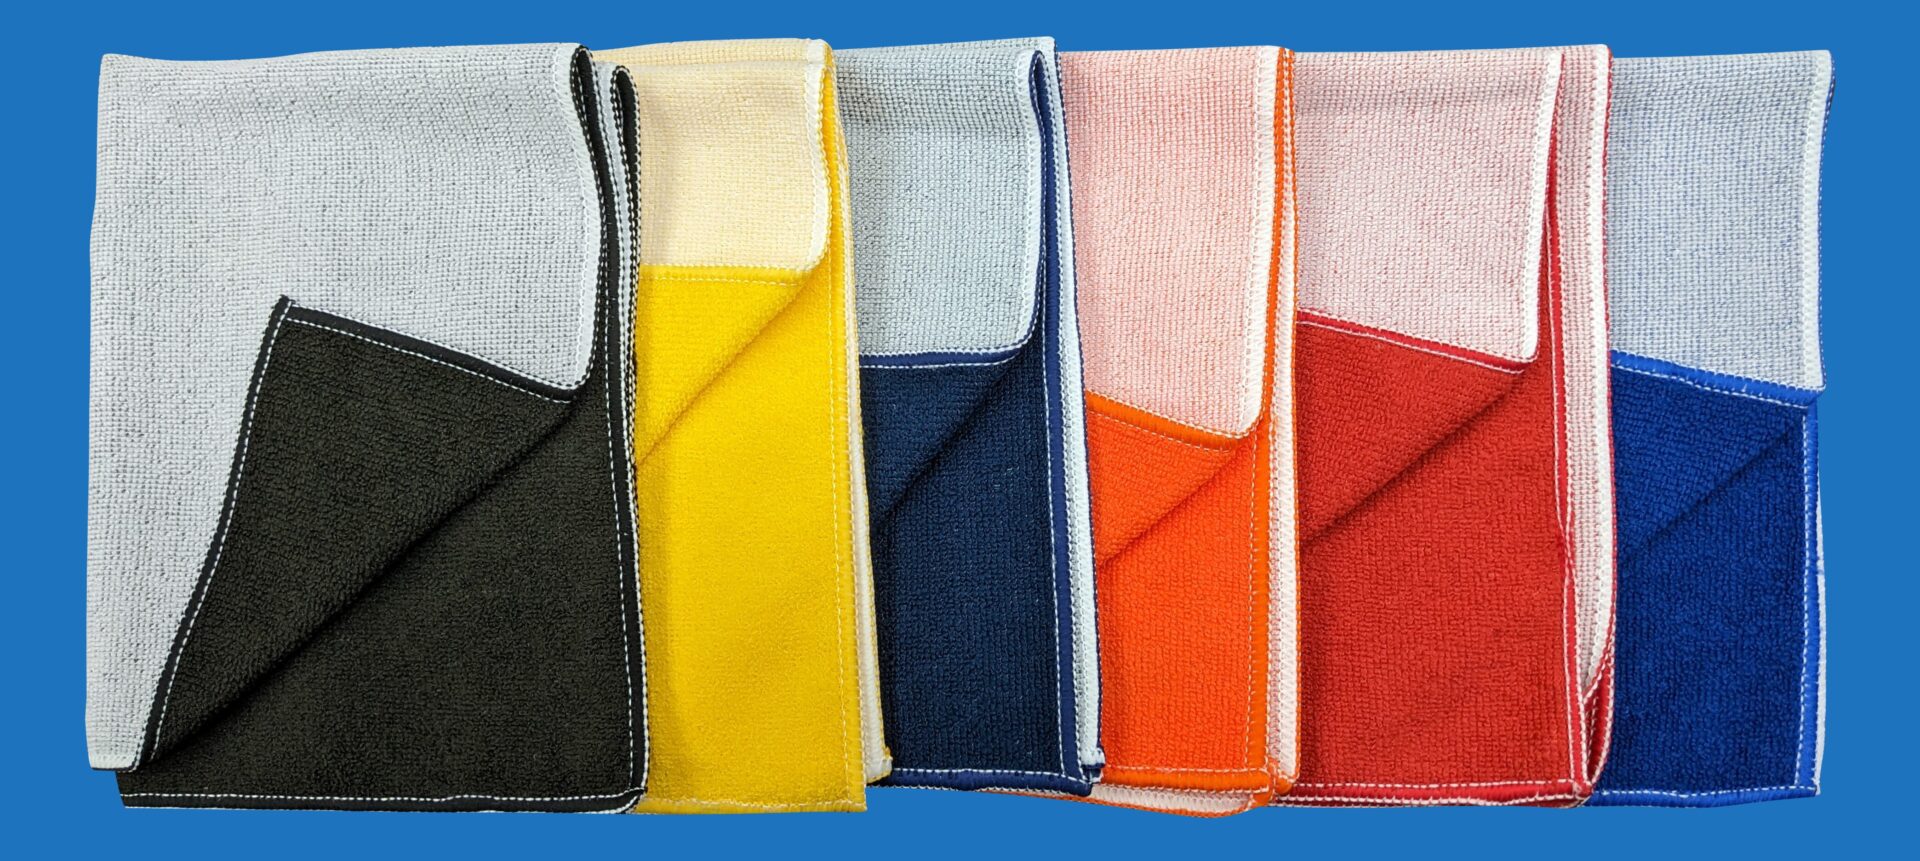 Colored Microfiber Towels